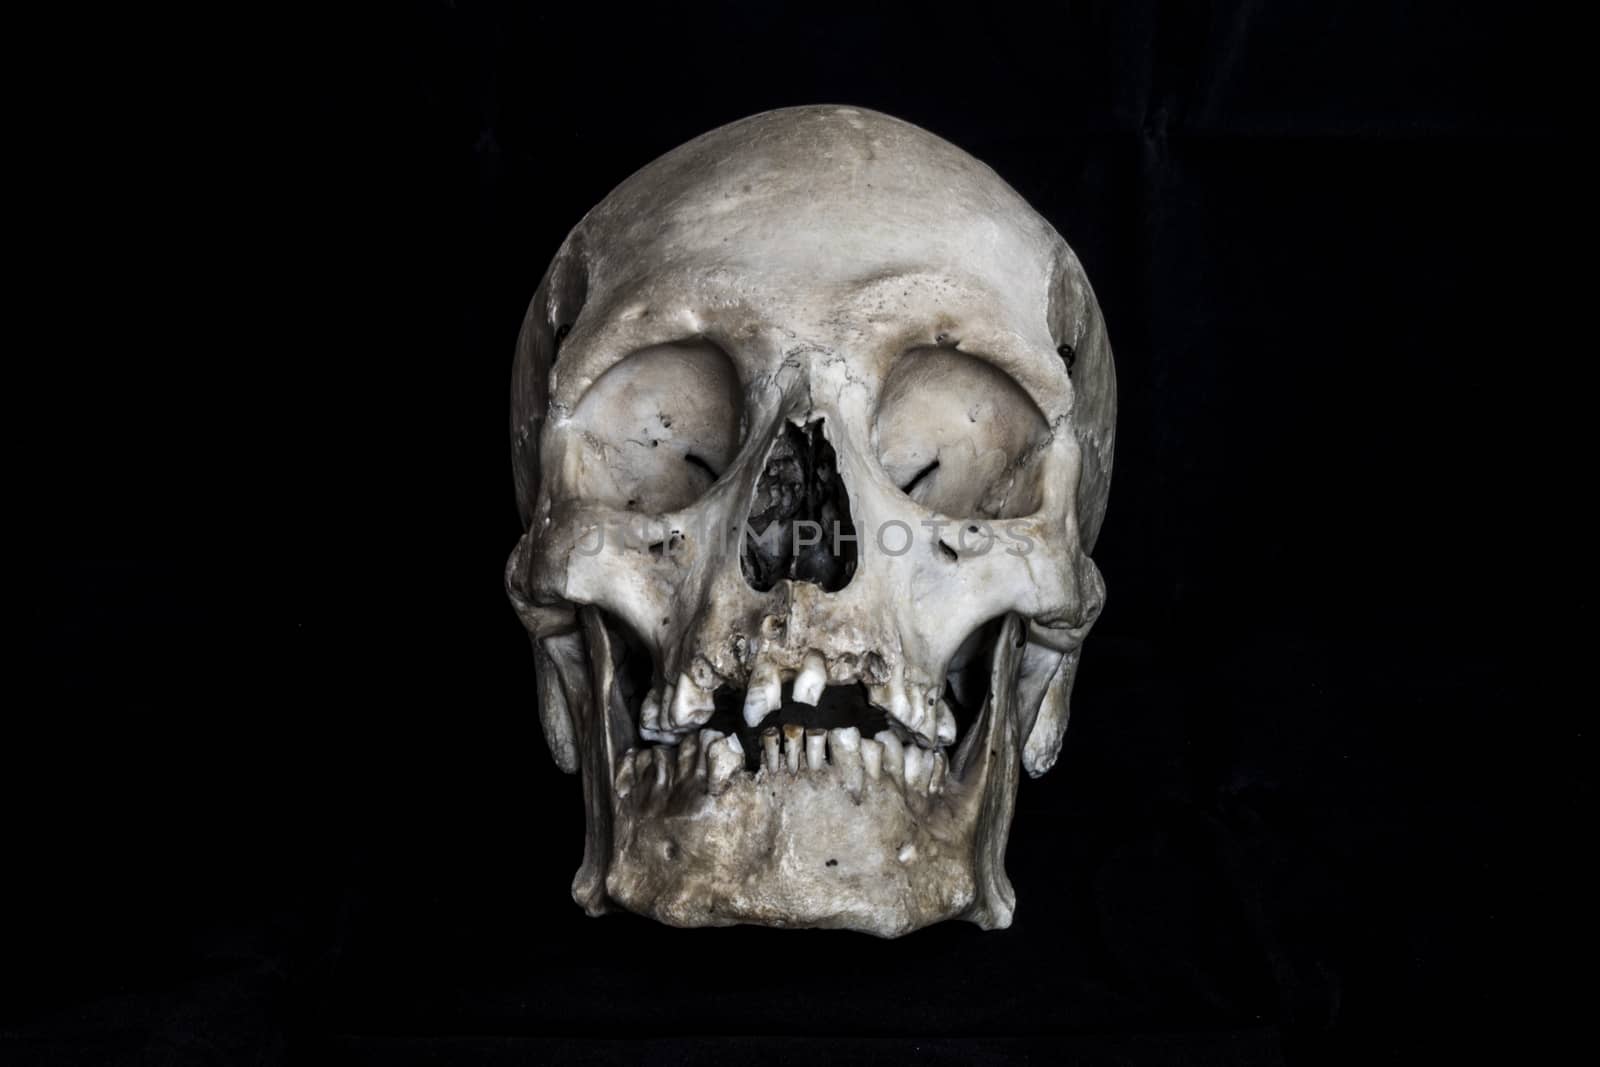 Human skull on black background by bluiten